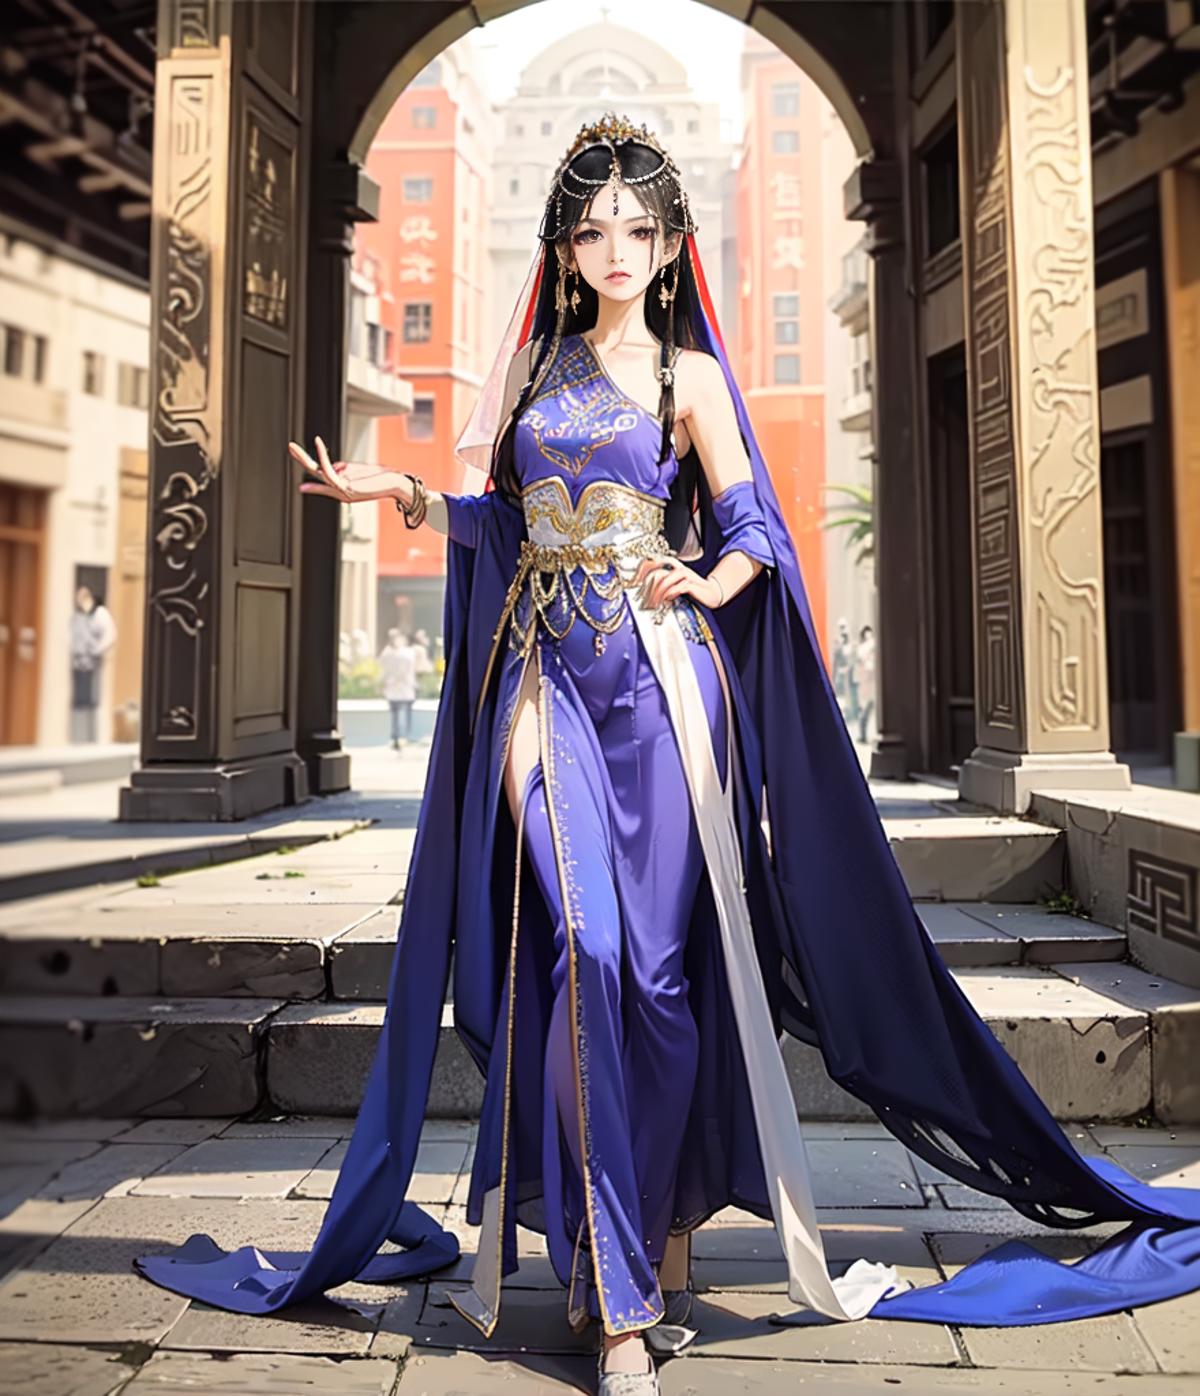 [Lah] China Goddess Fashion (敦煌风汉服新风格) image by LahIntheFutureland